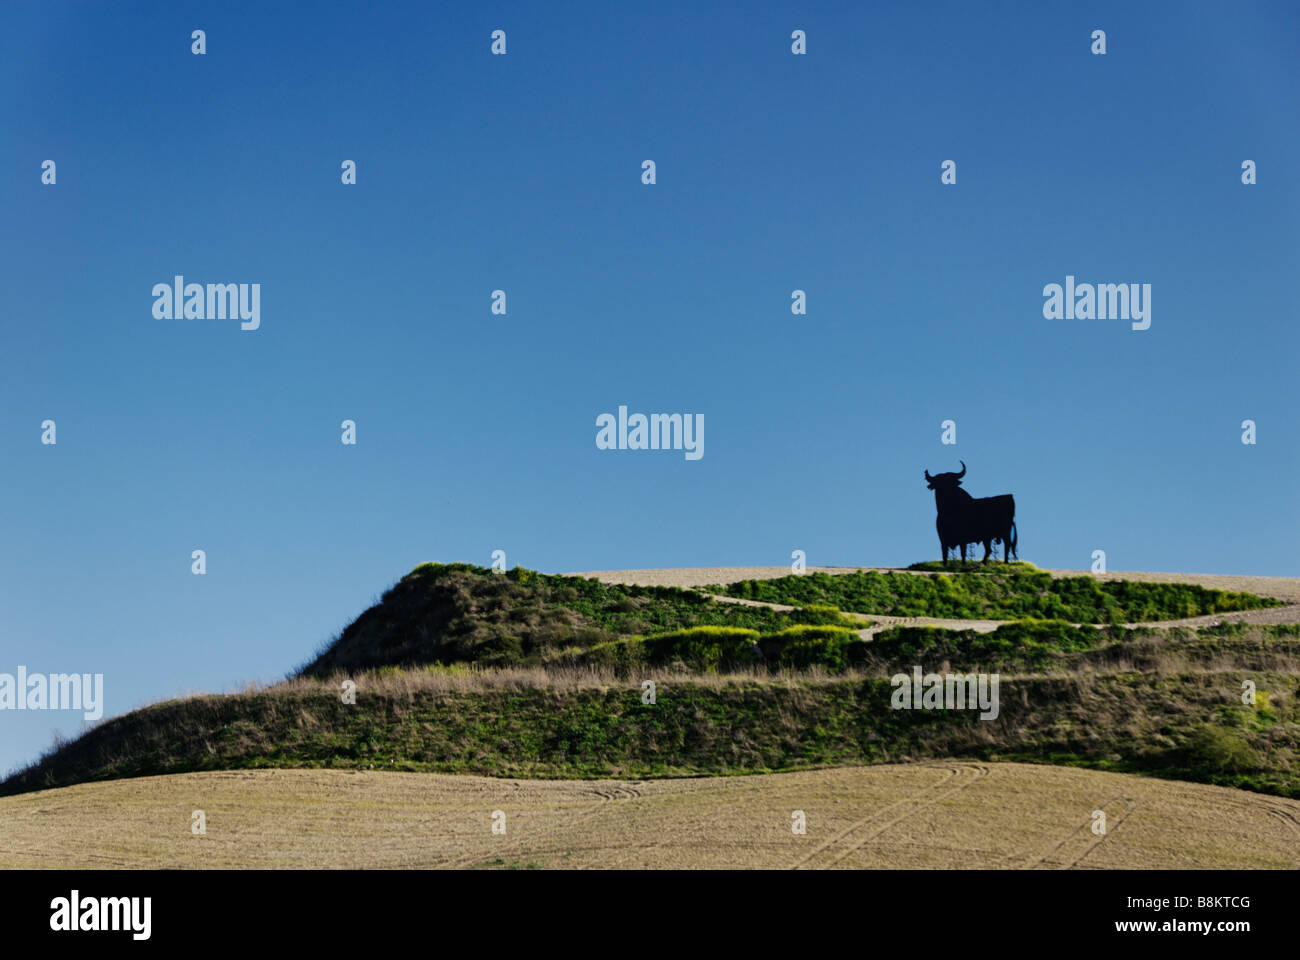 Famoso toro de Osborne en la ladera de una colina, España Foto de stock